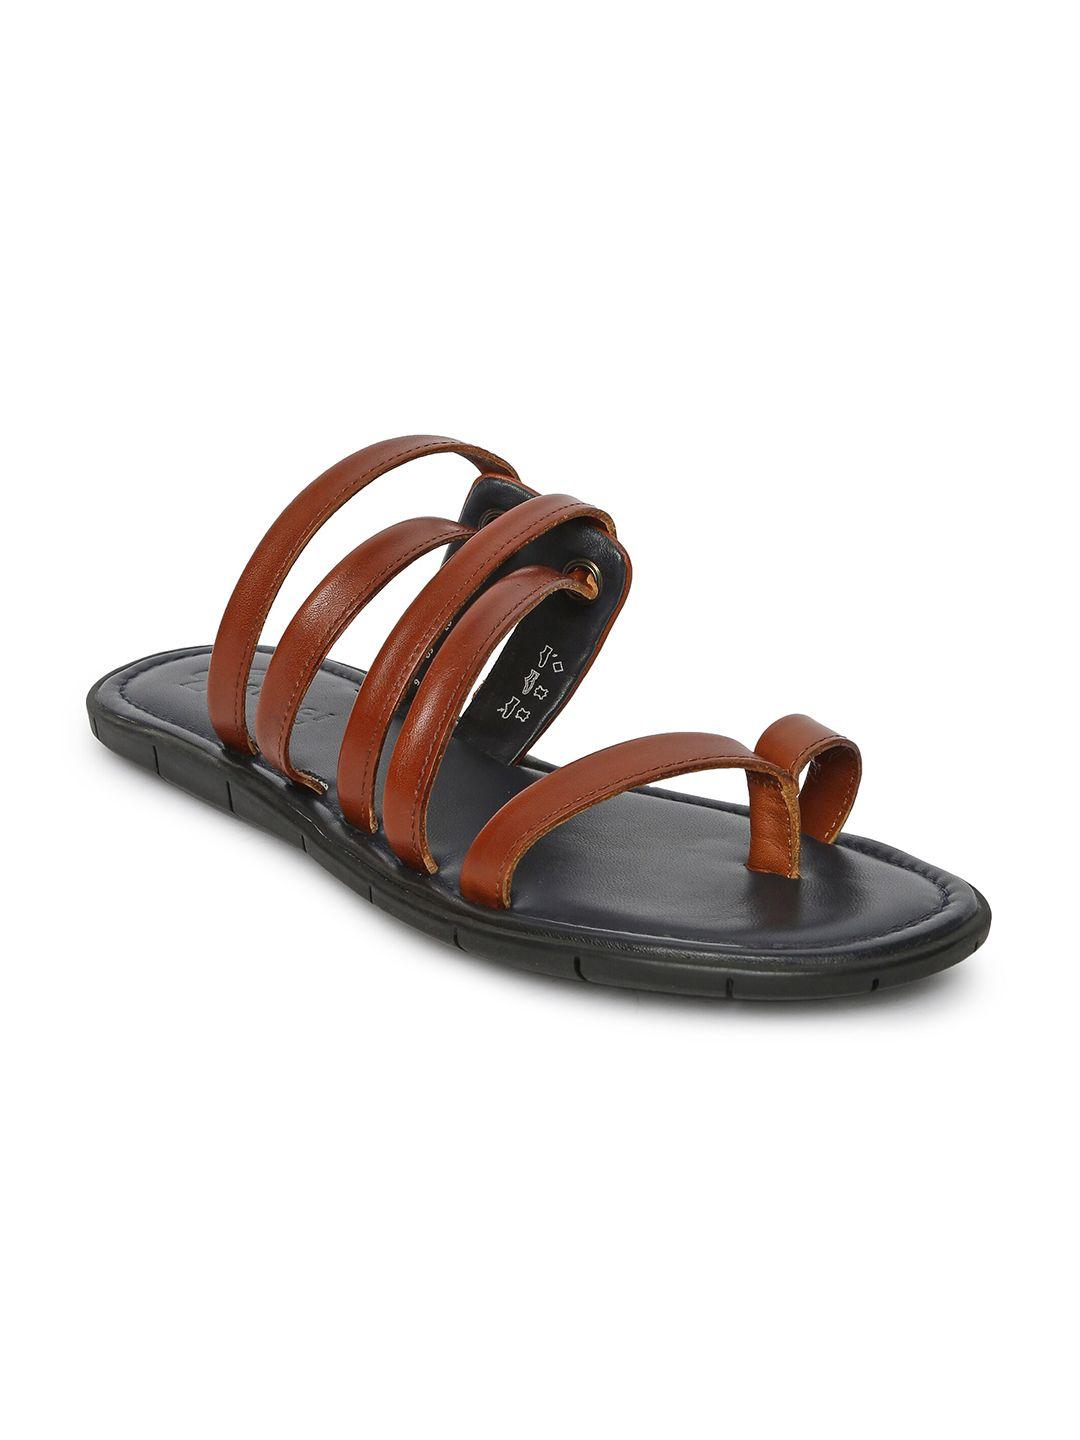 gabicci men tan & black leather comfort sandals